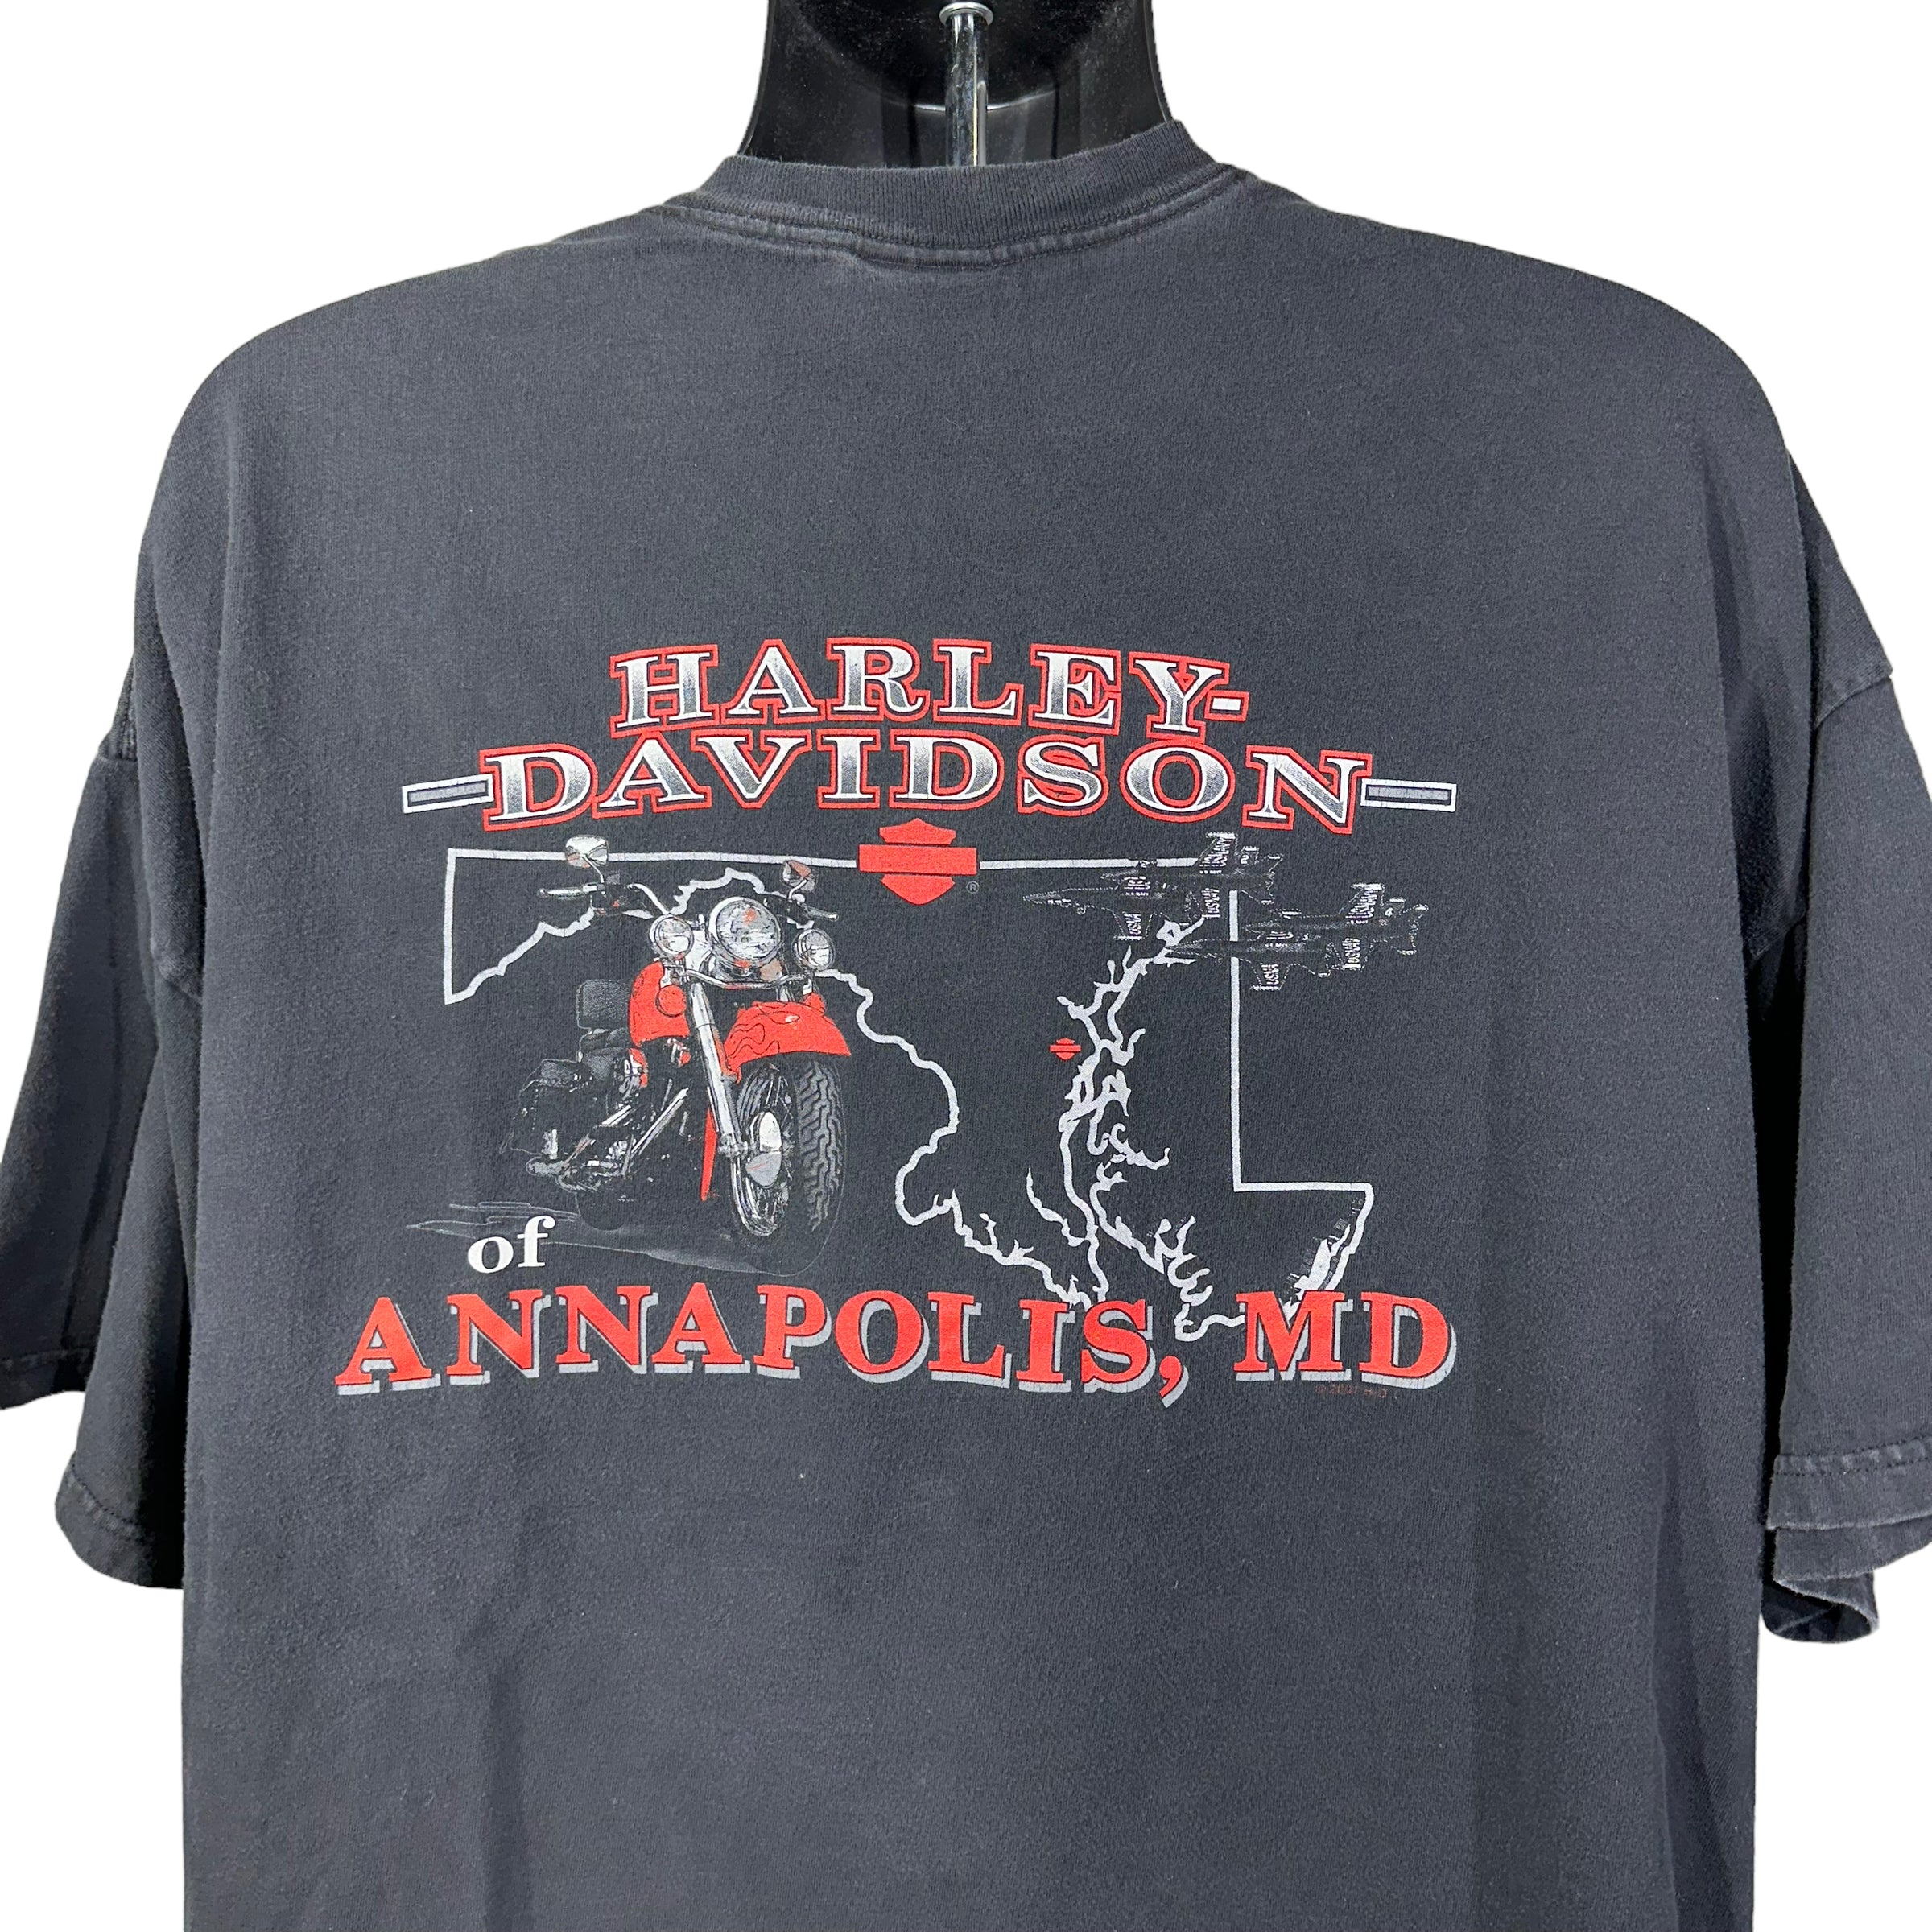 Vintage Harley Davidson "Annapolis, MD" Graphic Tee 90s